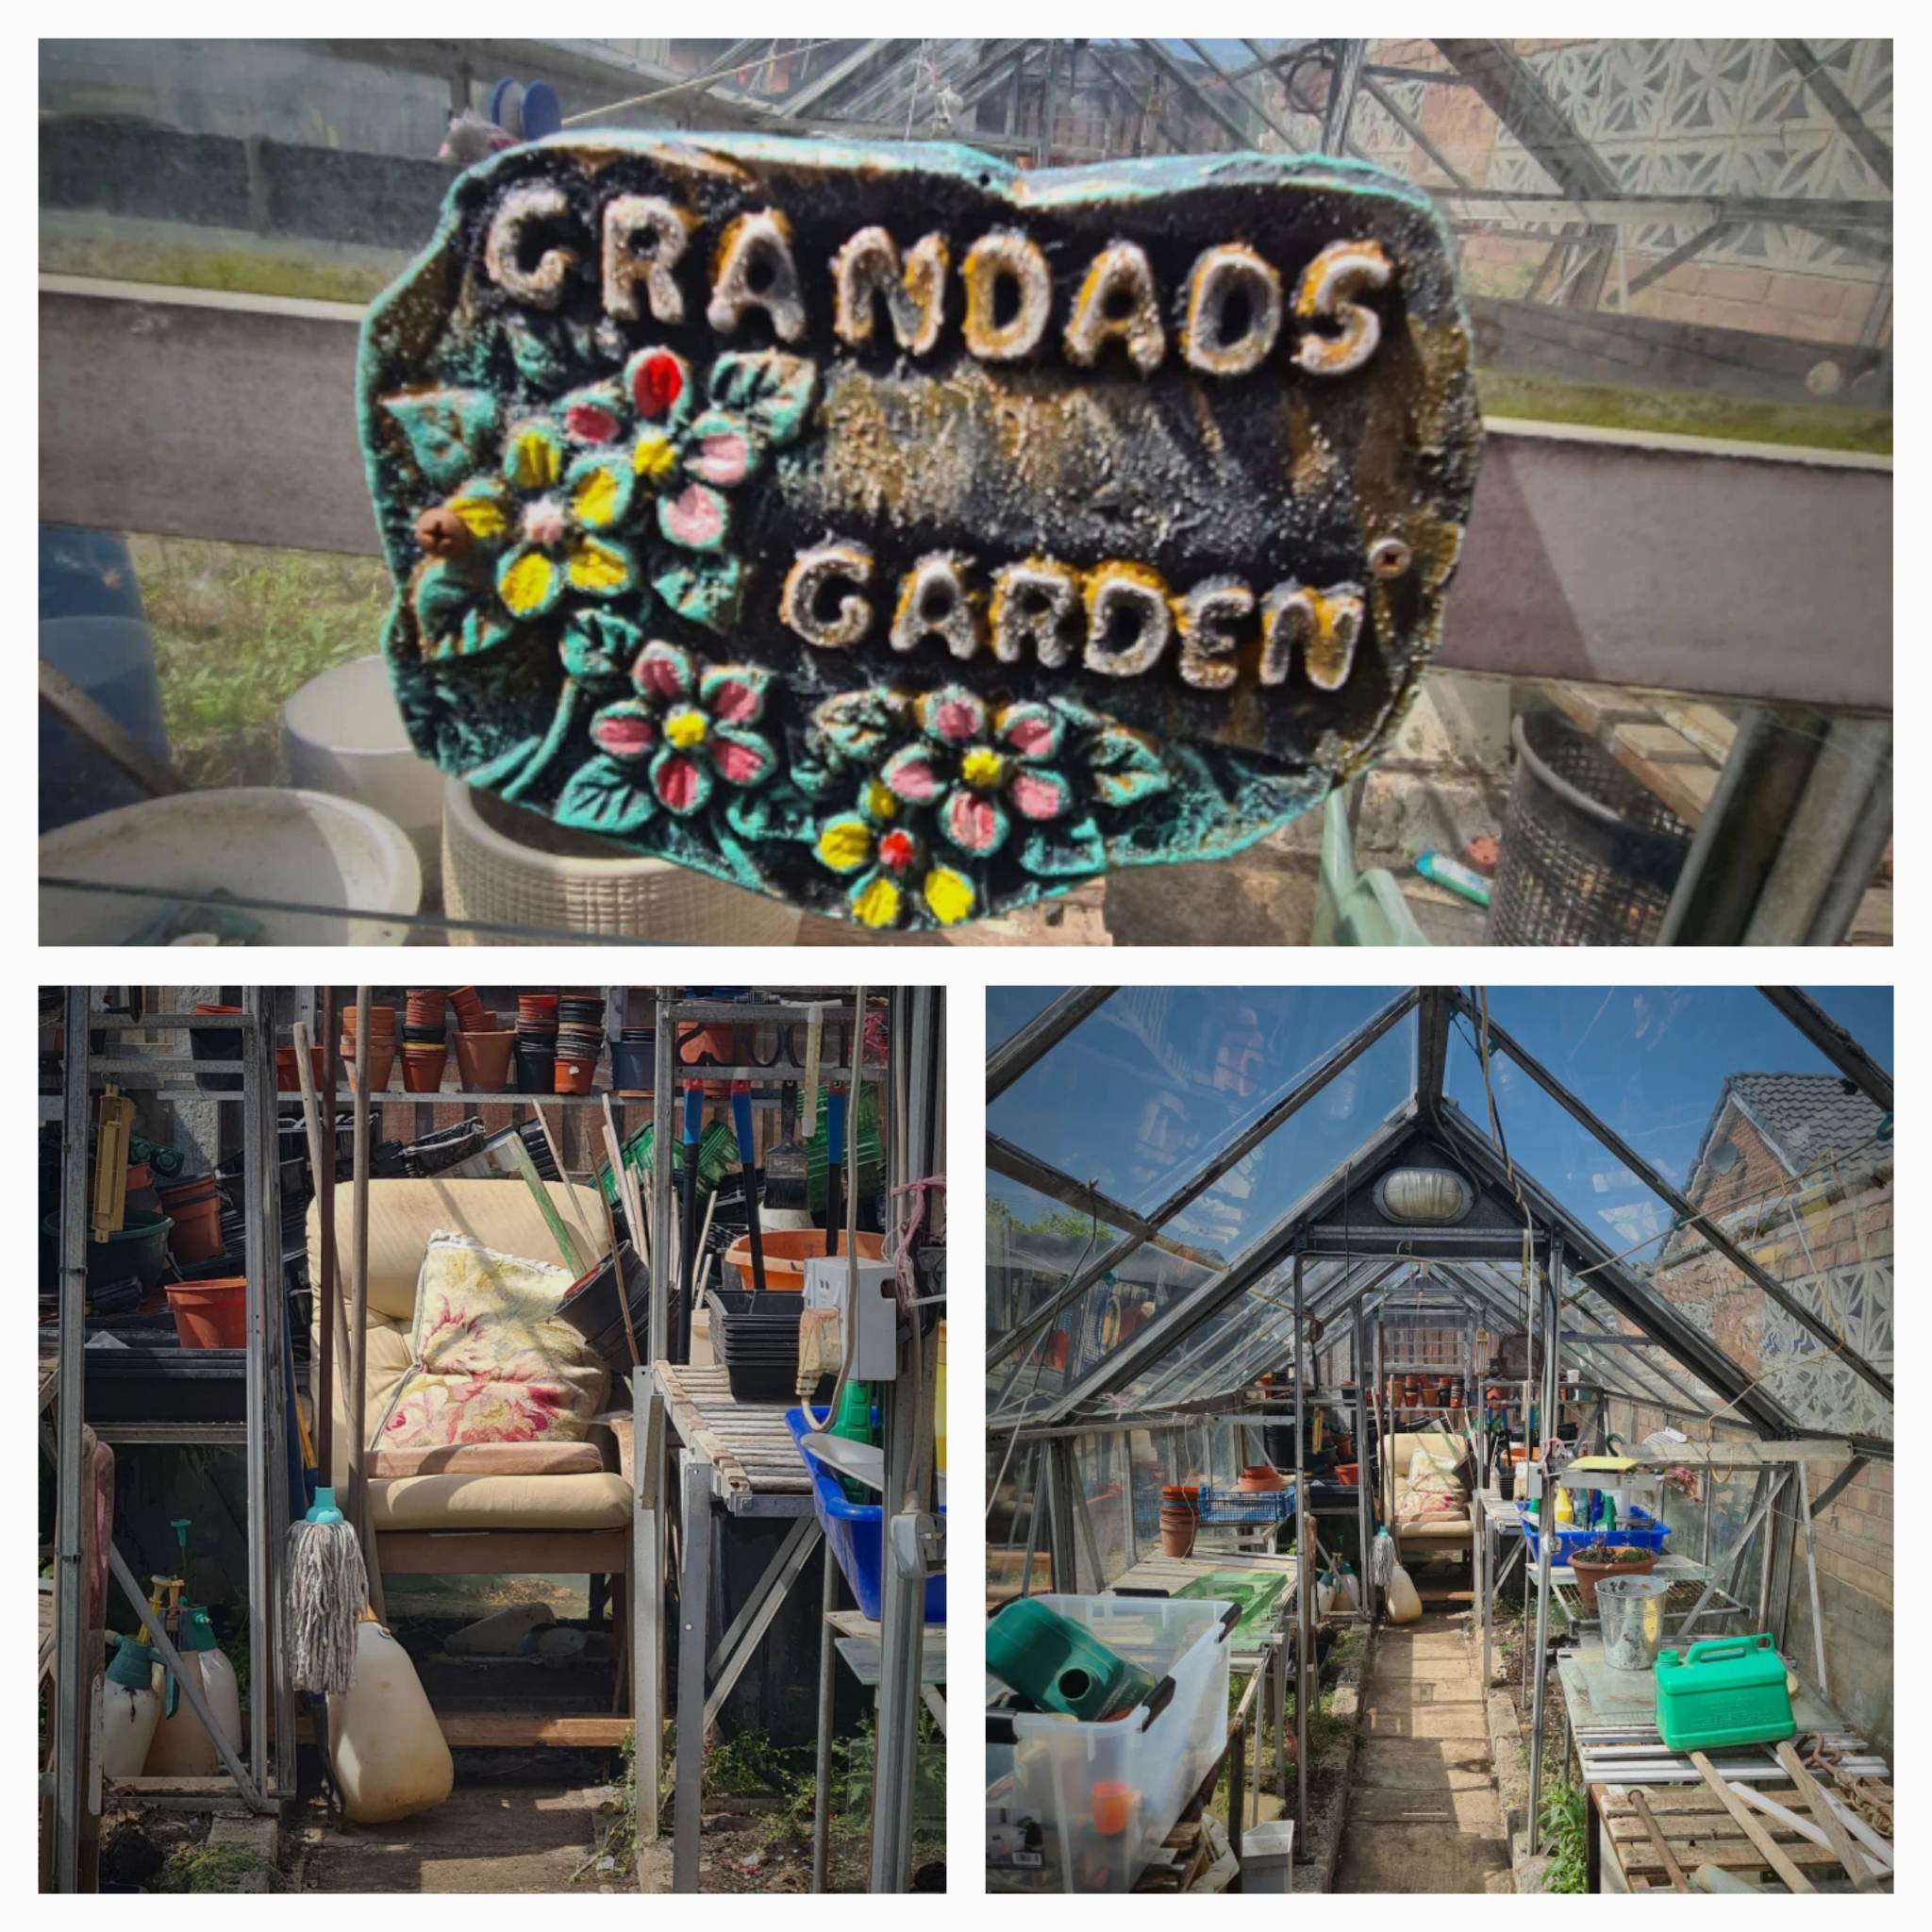 ‘In Grandads Garden.’